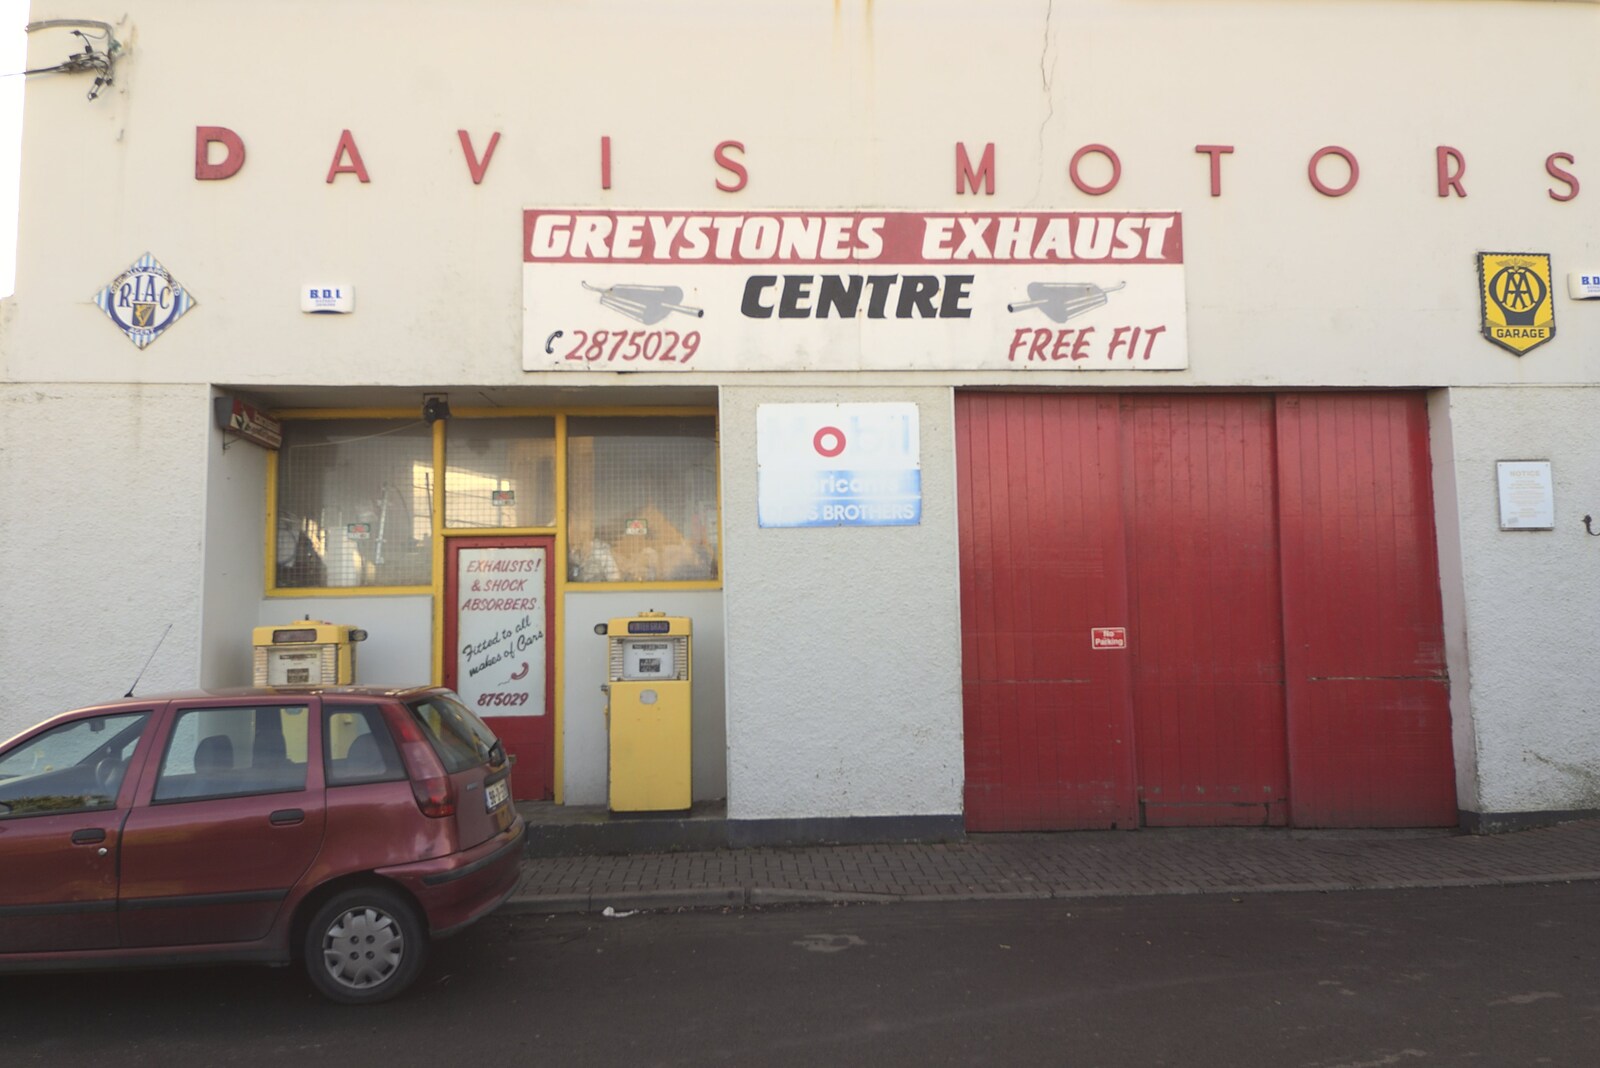 Davis Motors petrol station, Greystones from A Day in Greystones, County Dublin, Ireland - 28th February 2010